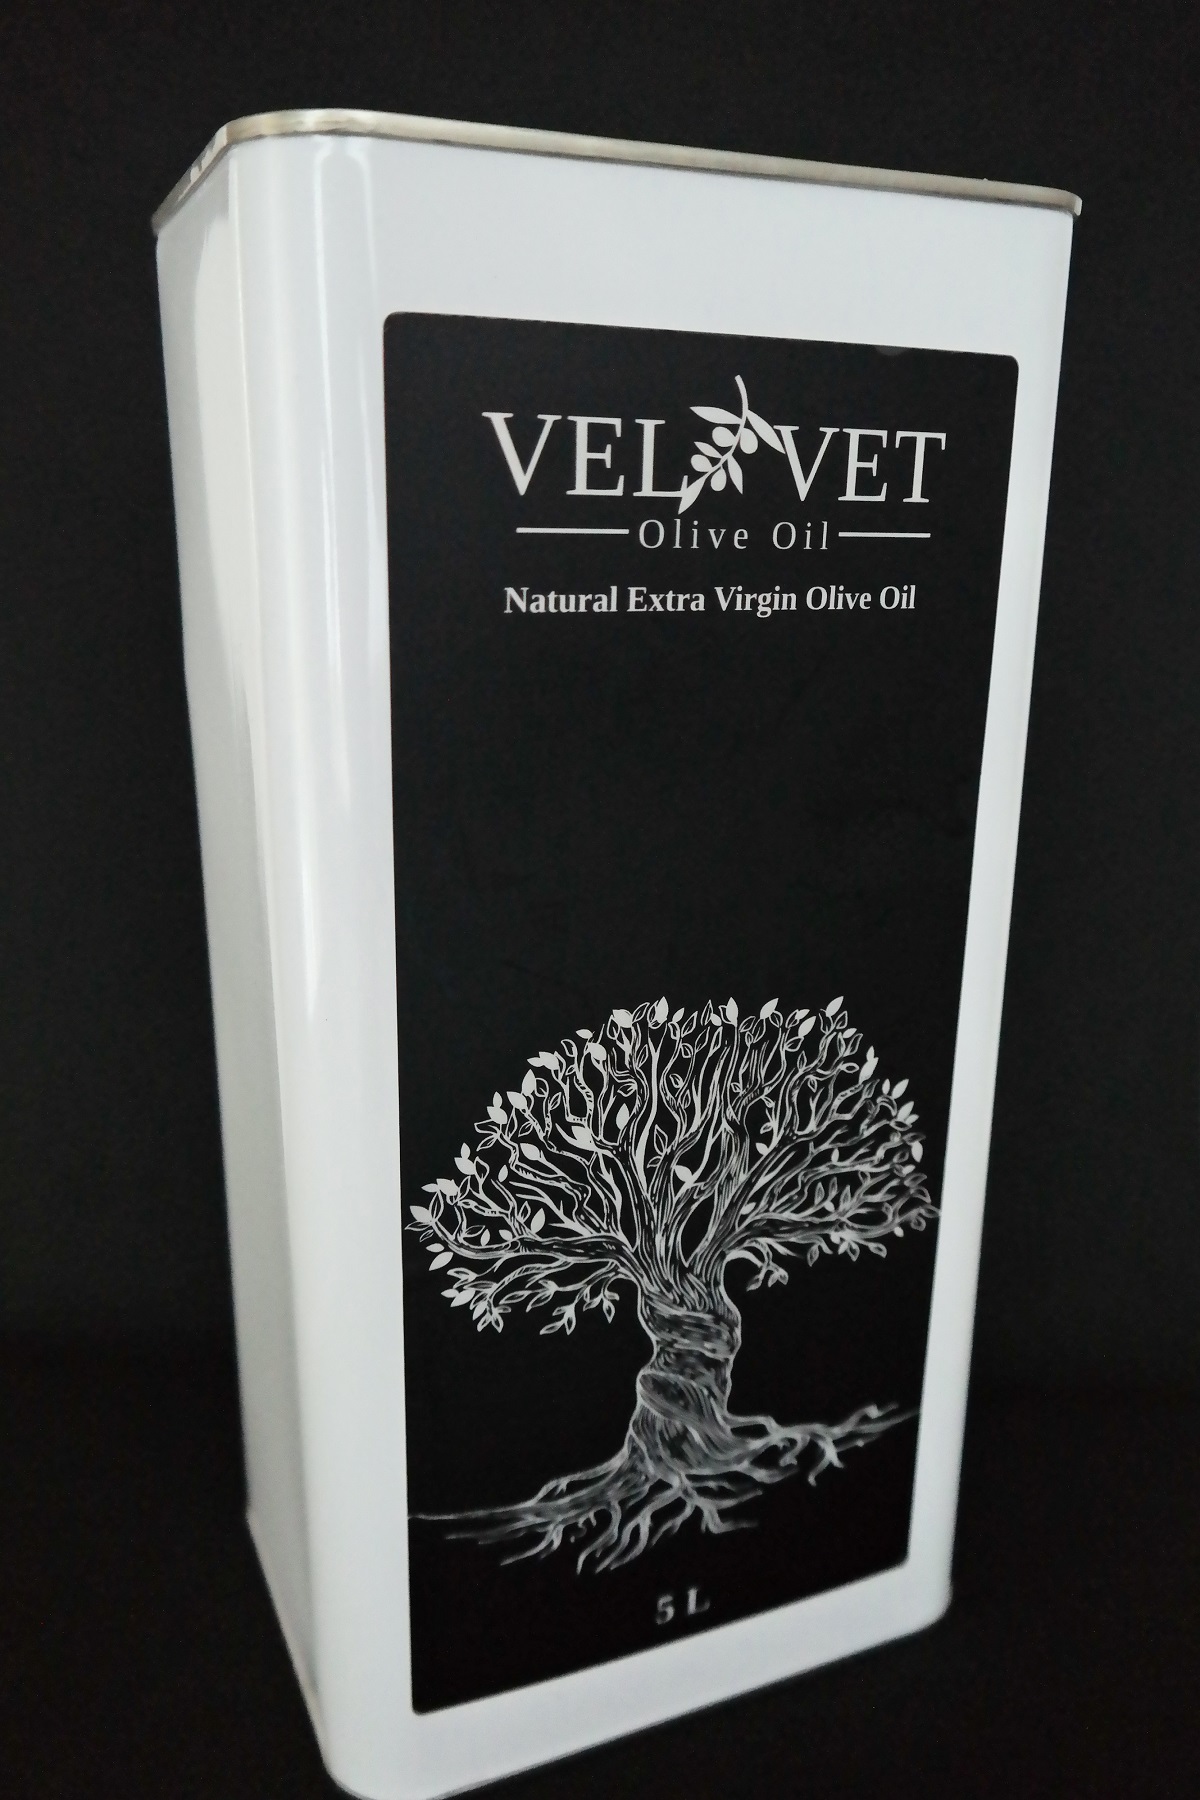 Velvet Olive Oil Olgun Hasat Natural Sızma Zeytinyağı 5 L